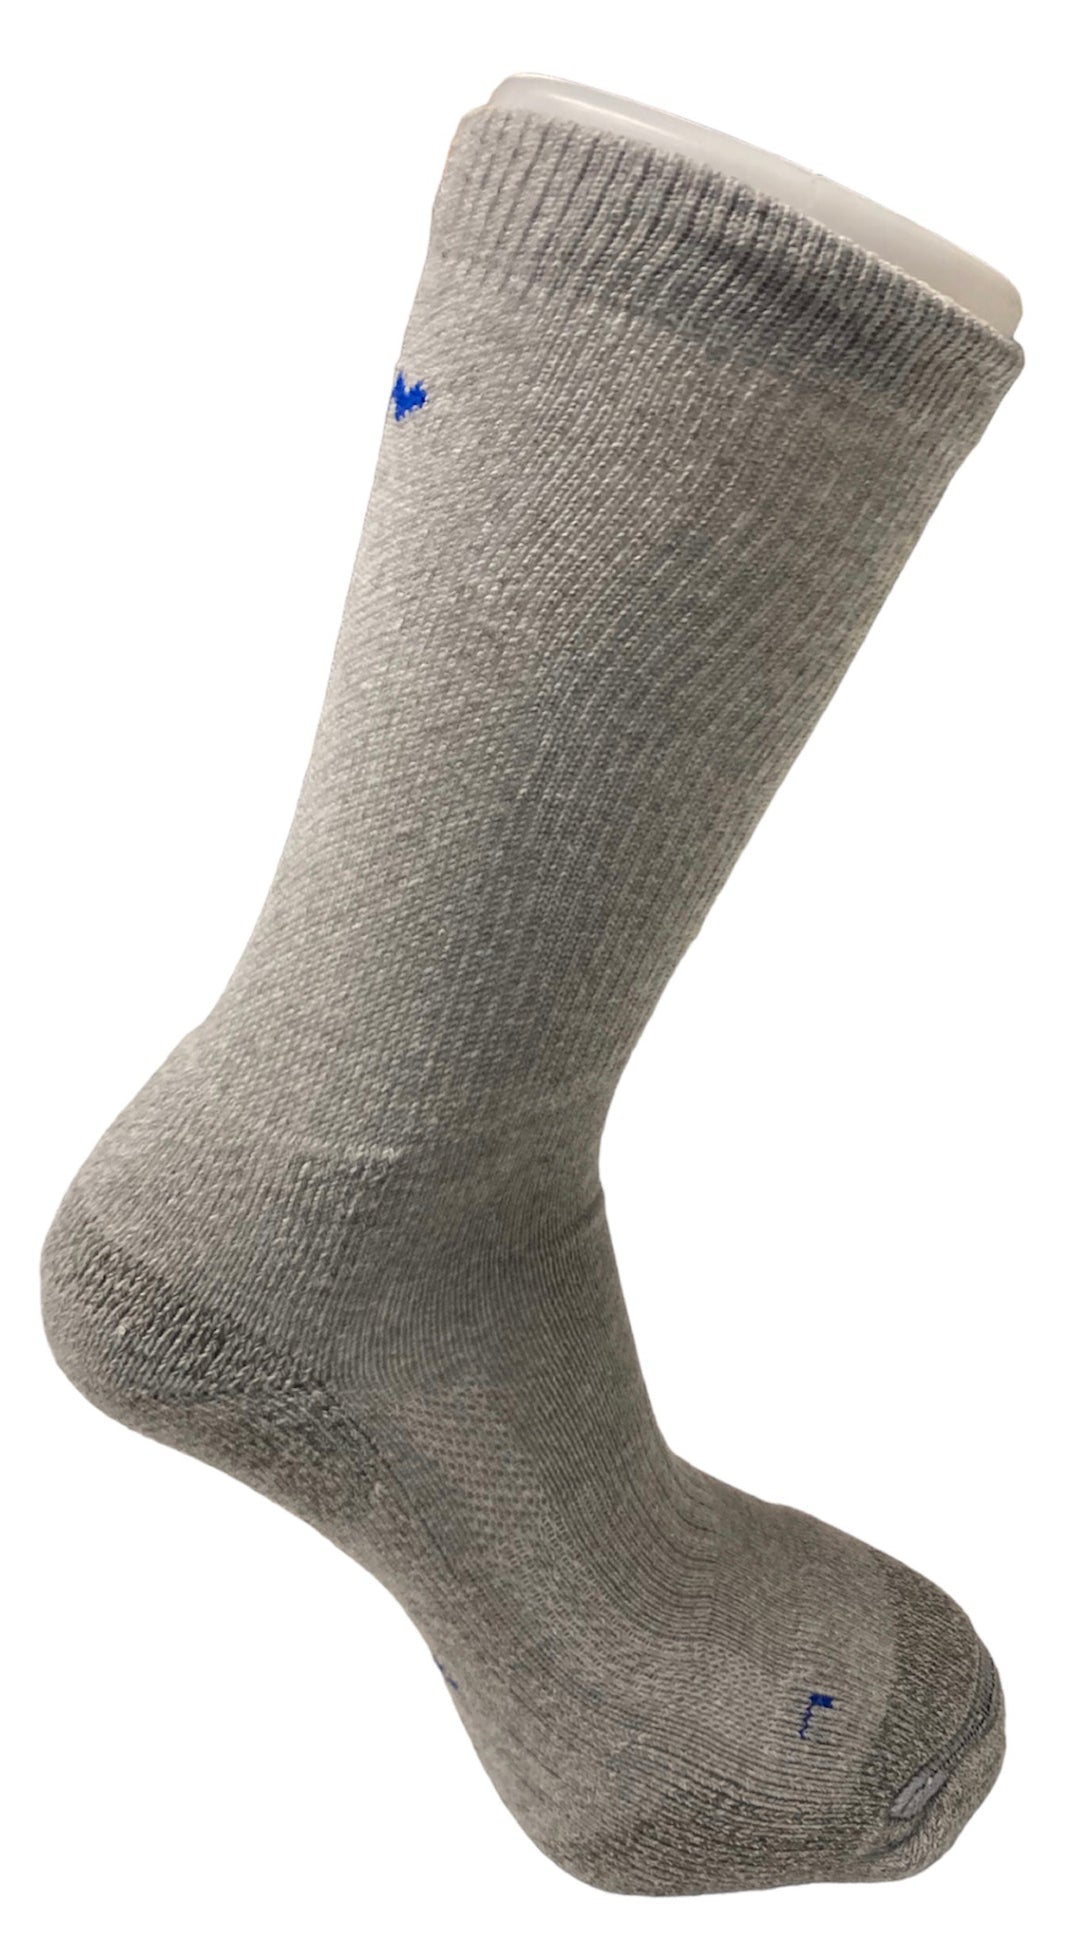 Tailormade socks